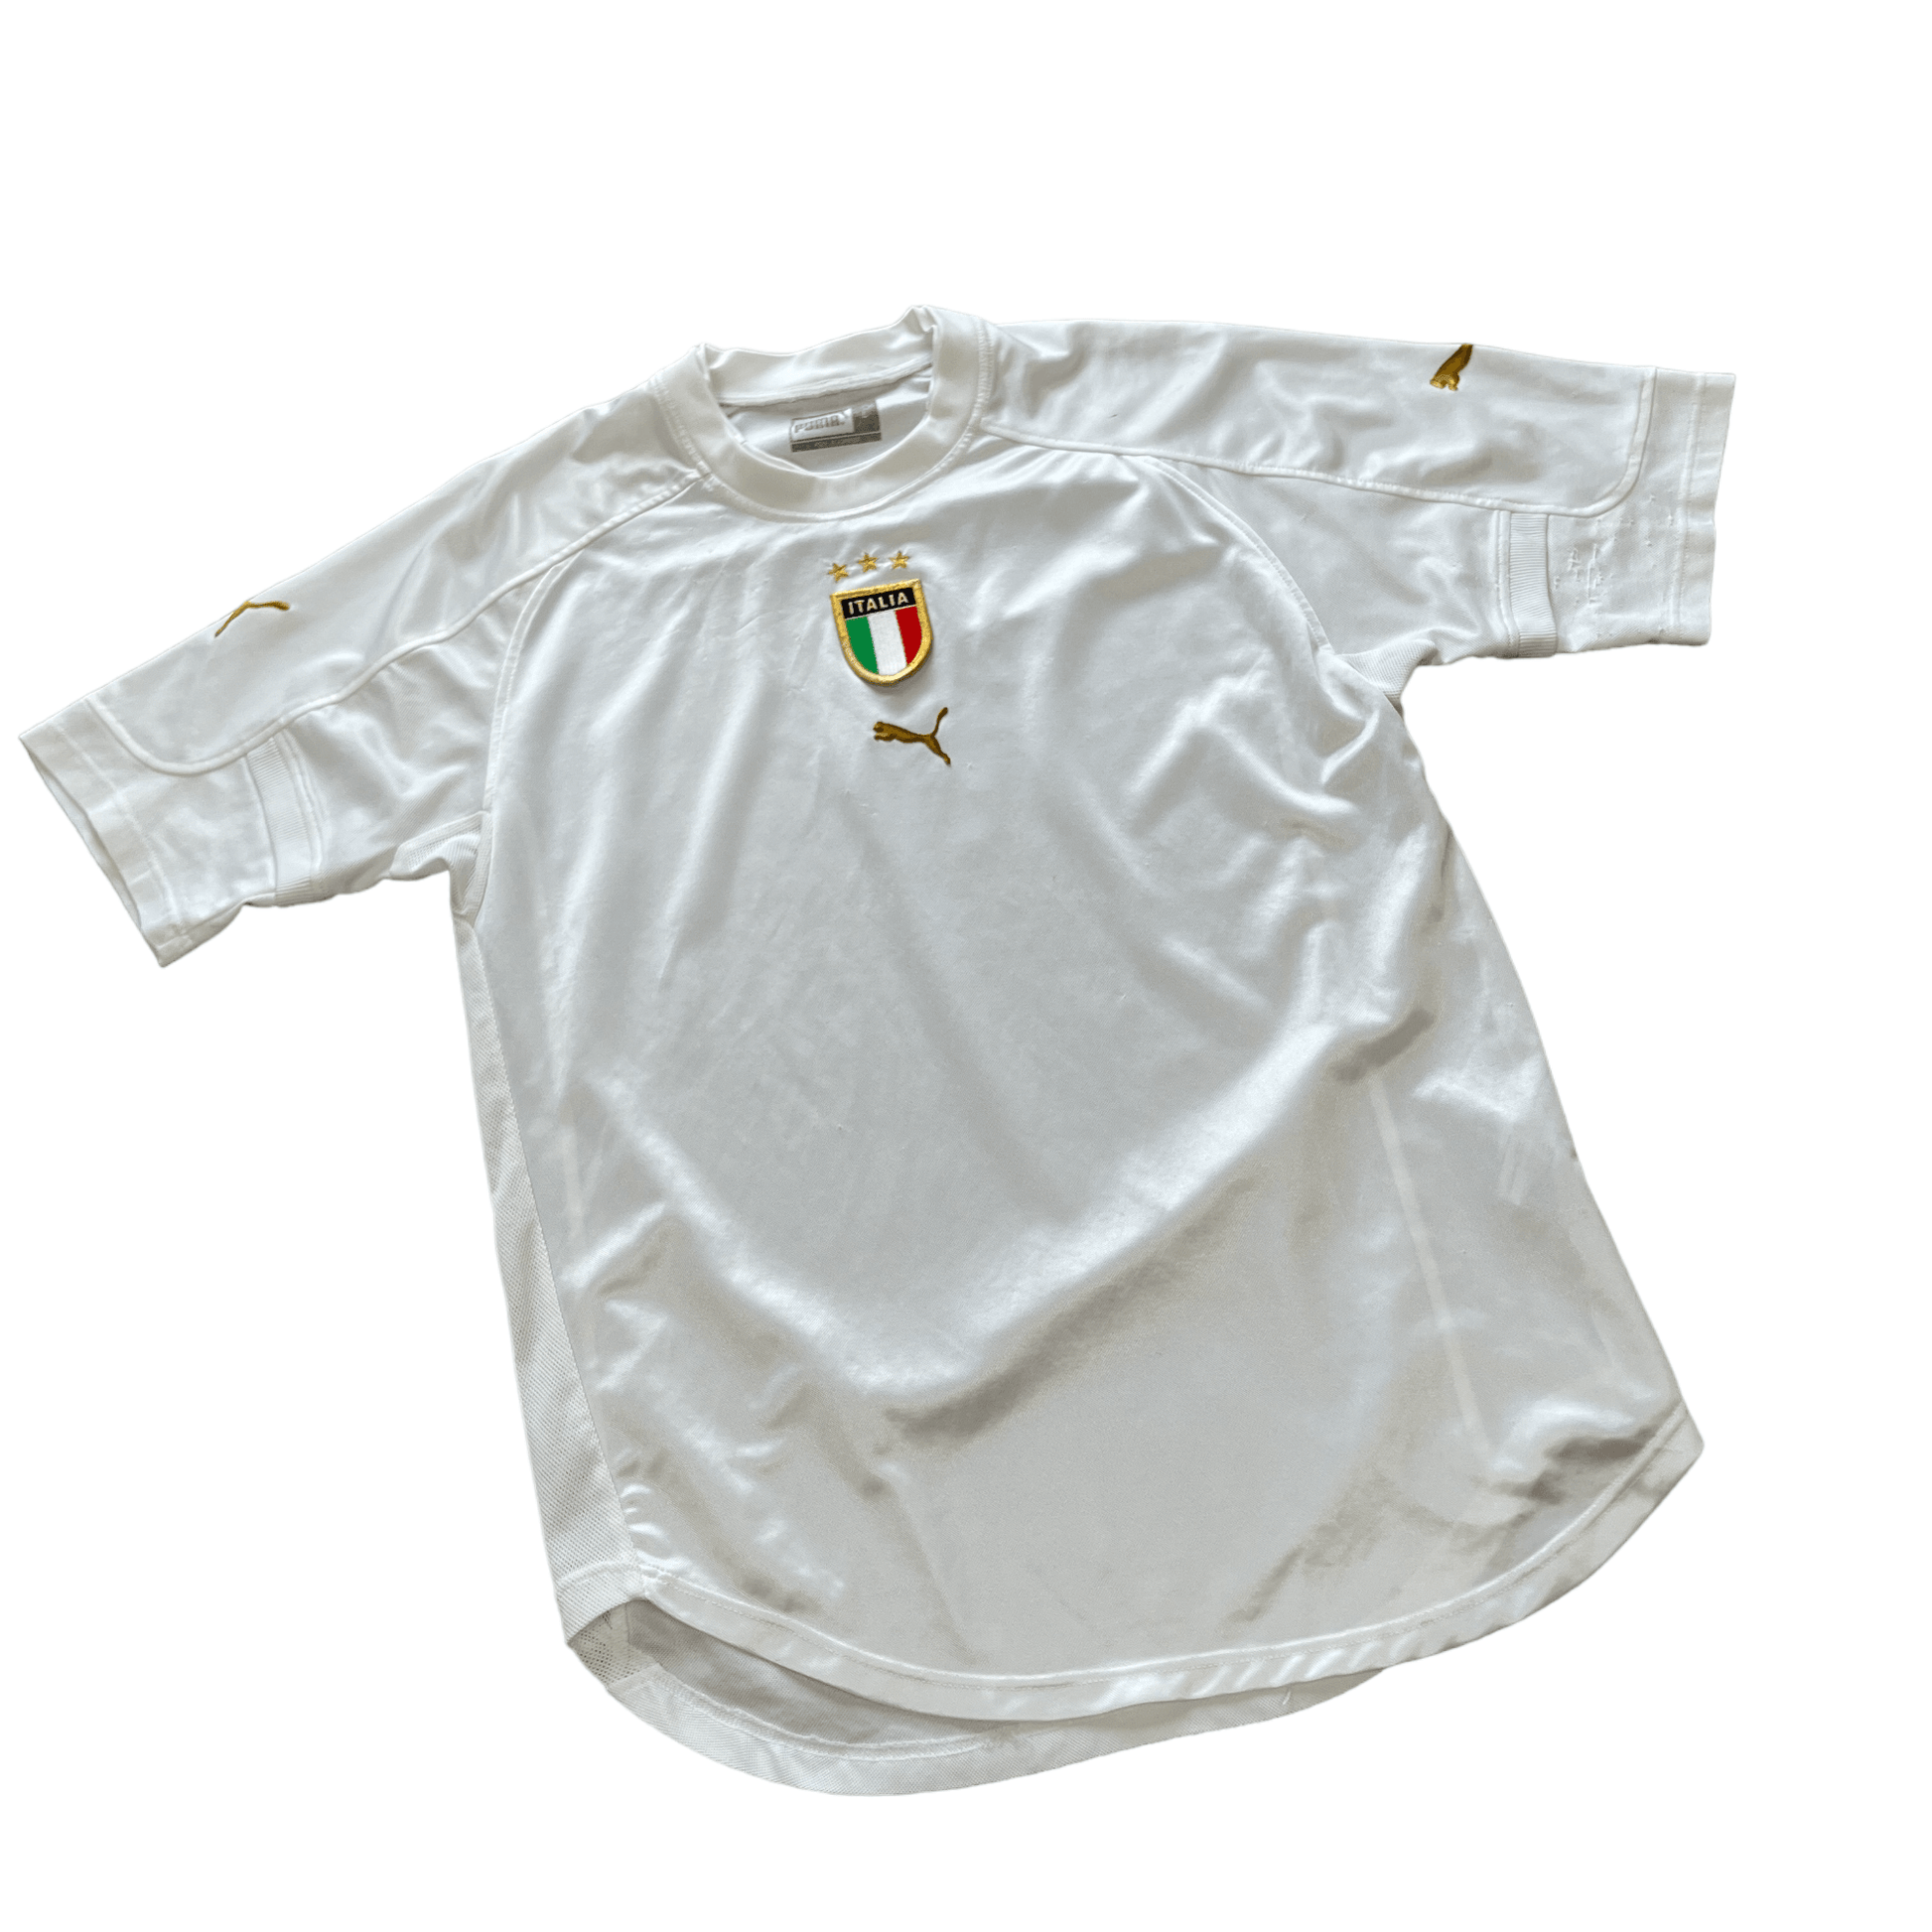 2004-06 White Puma Italy Away Shirt - Large - The Streetwear Studio